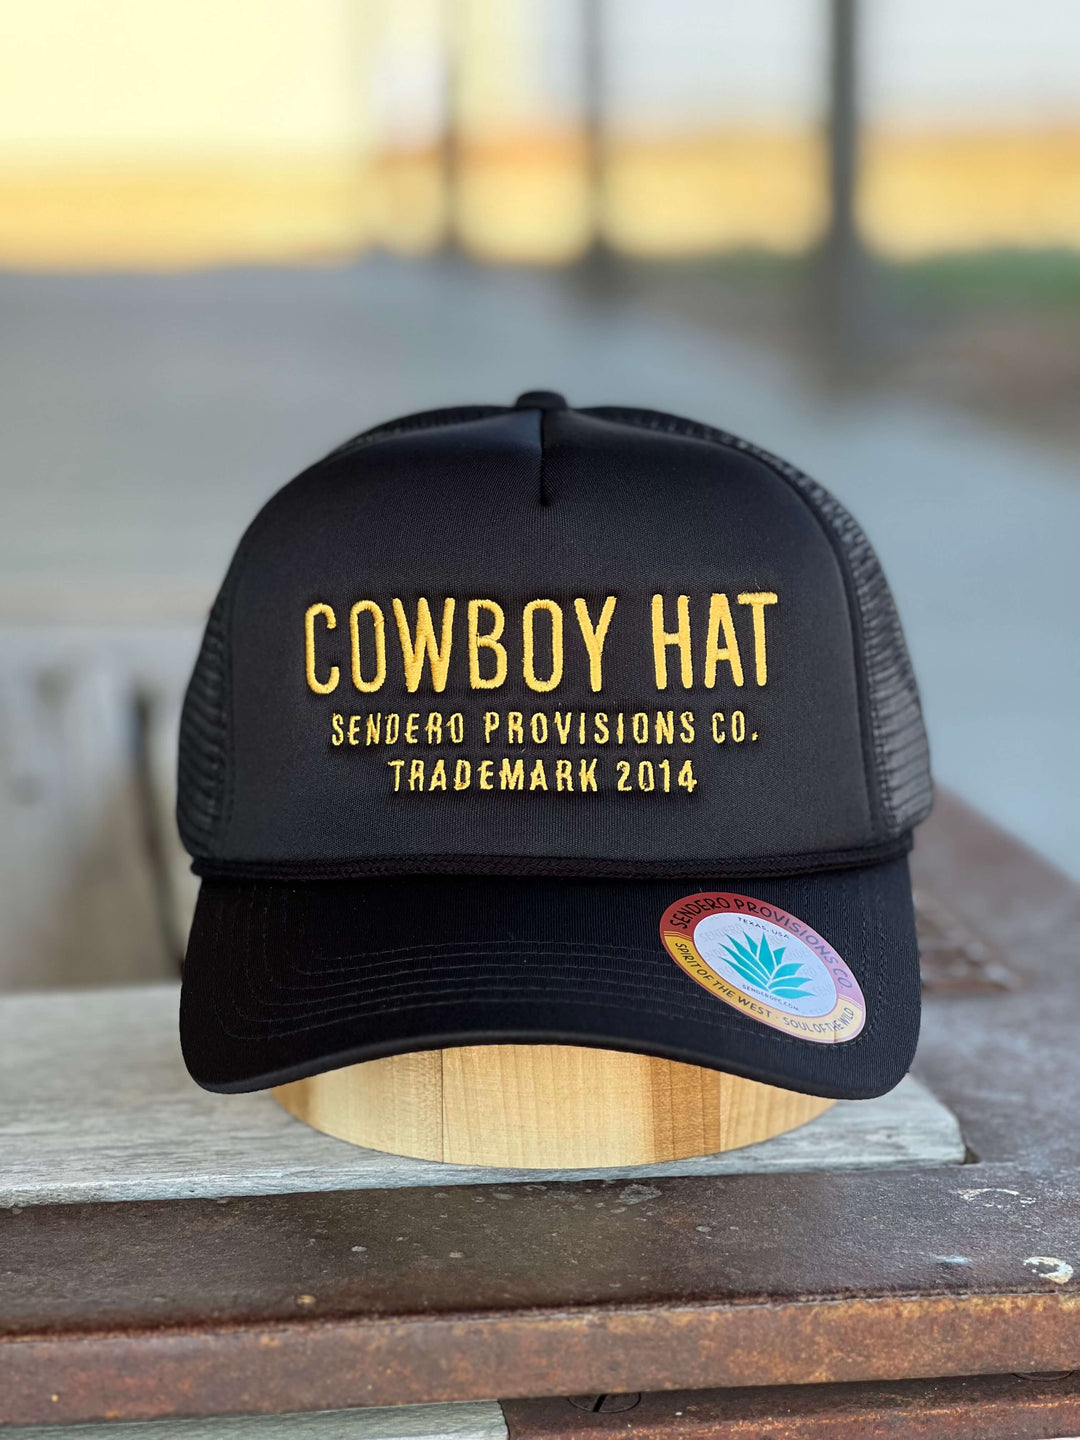 Sendero Provisions Co. | Cowboy Hat Cap Black